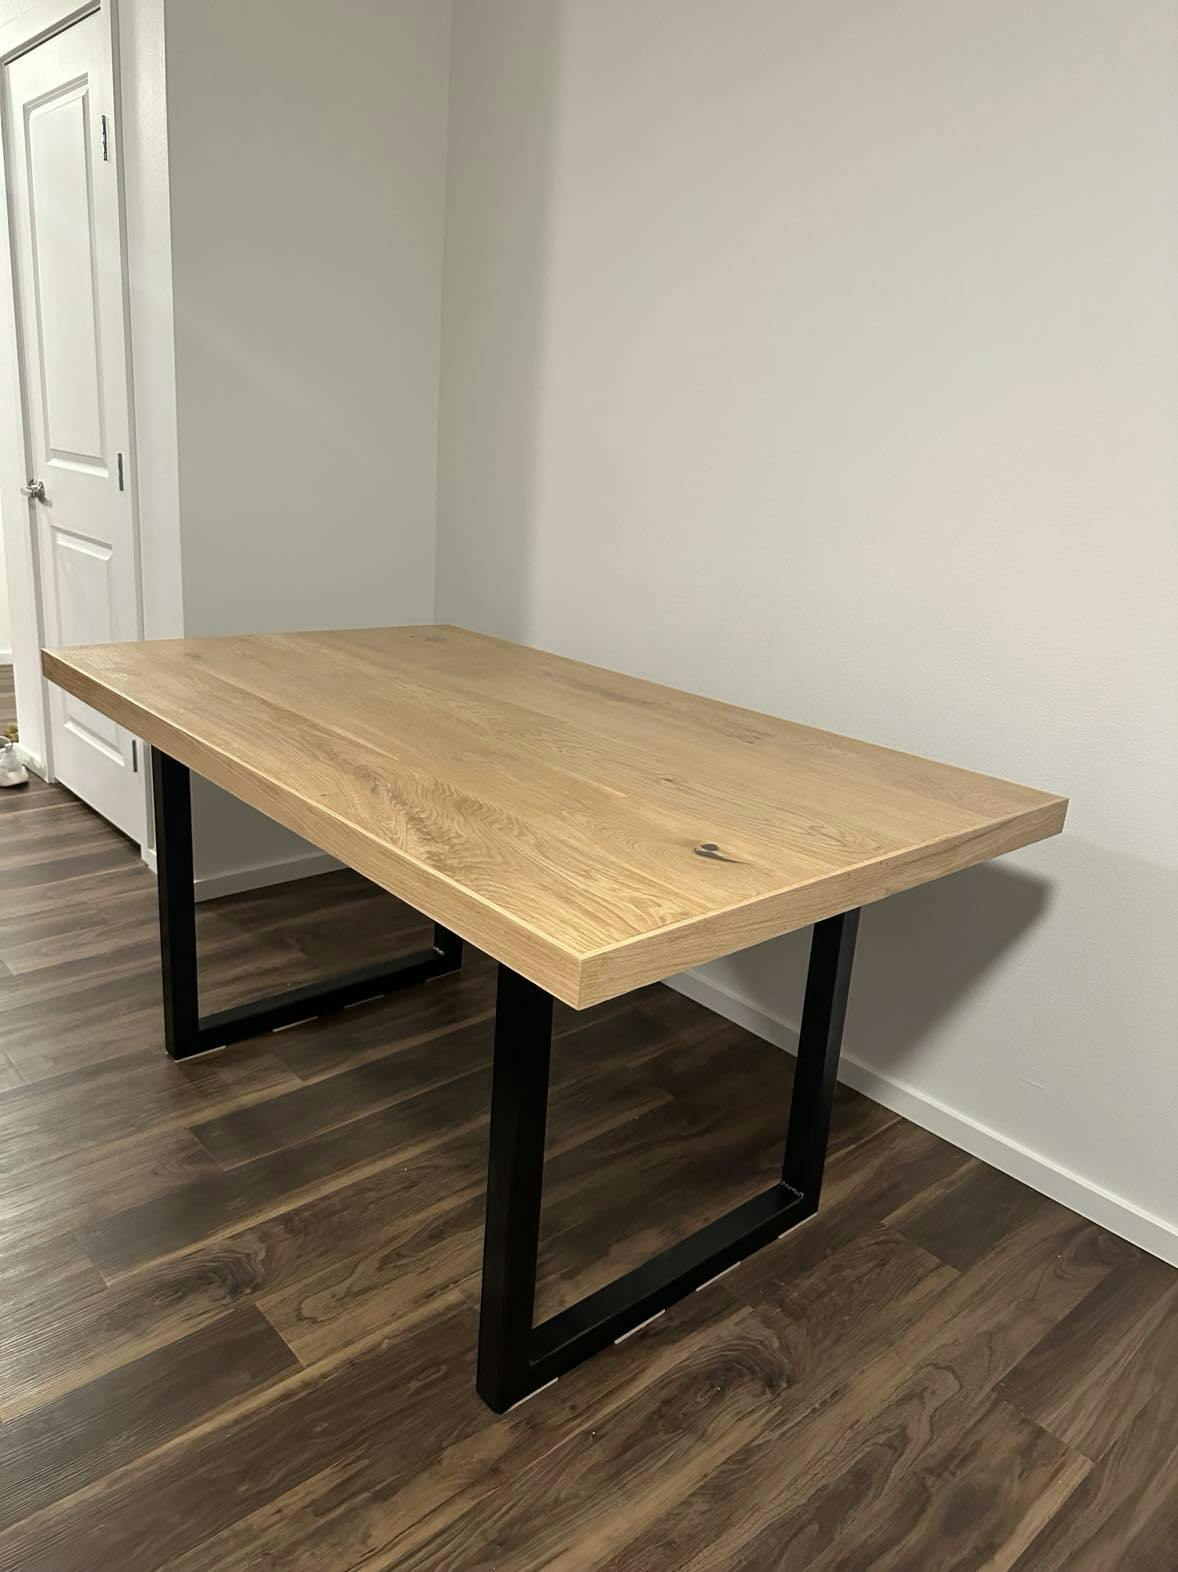 A custom table that we built